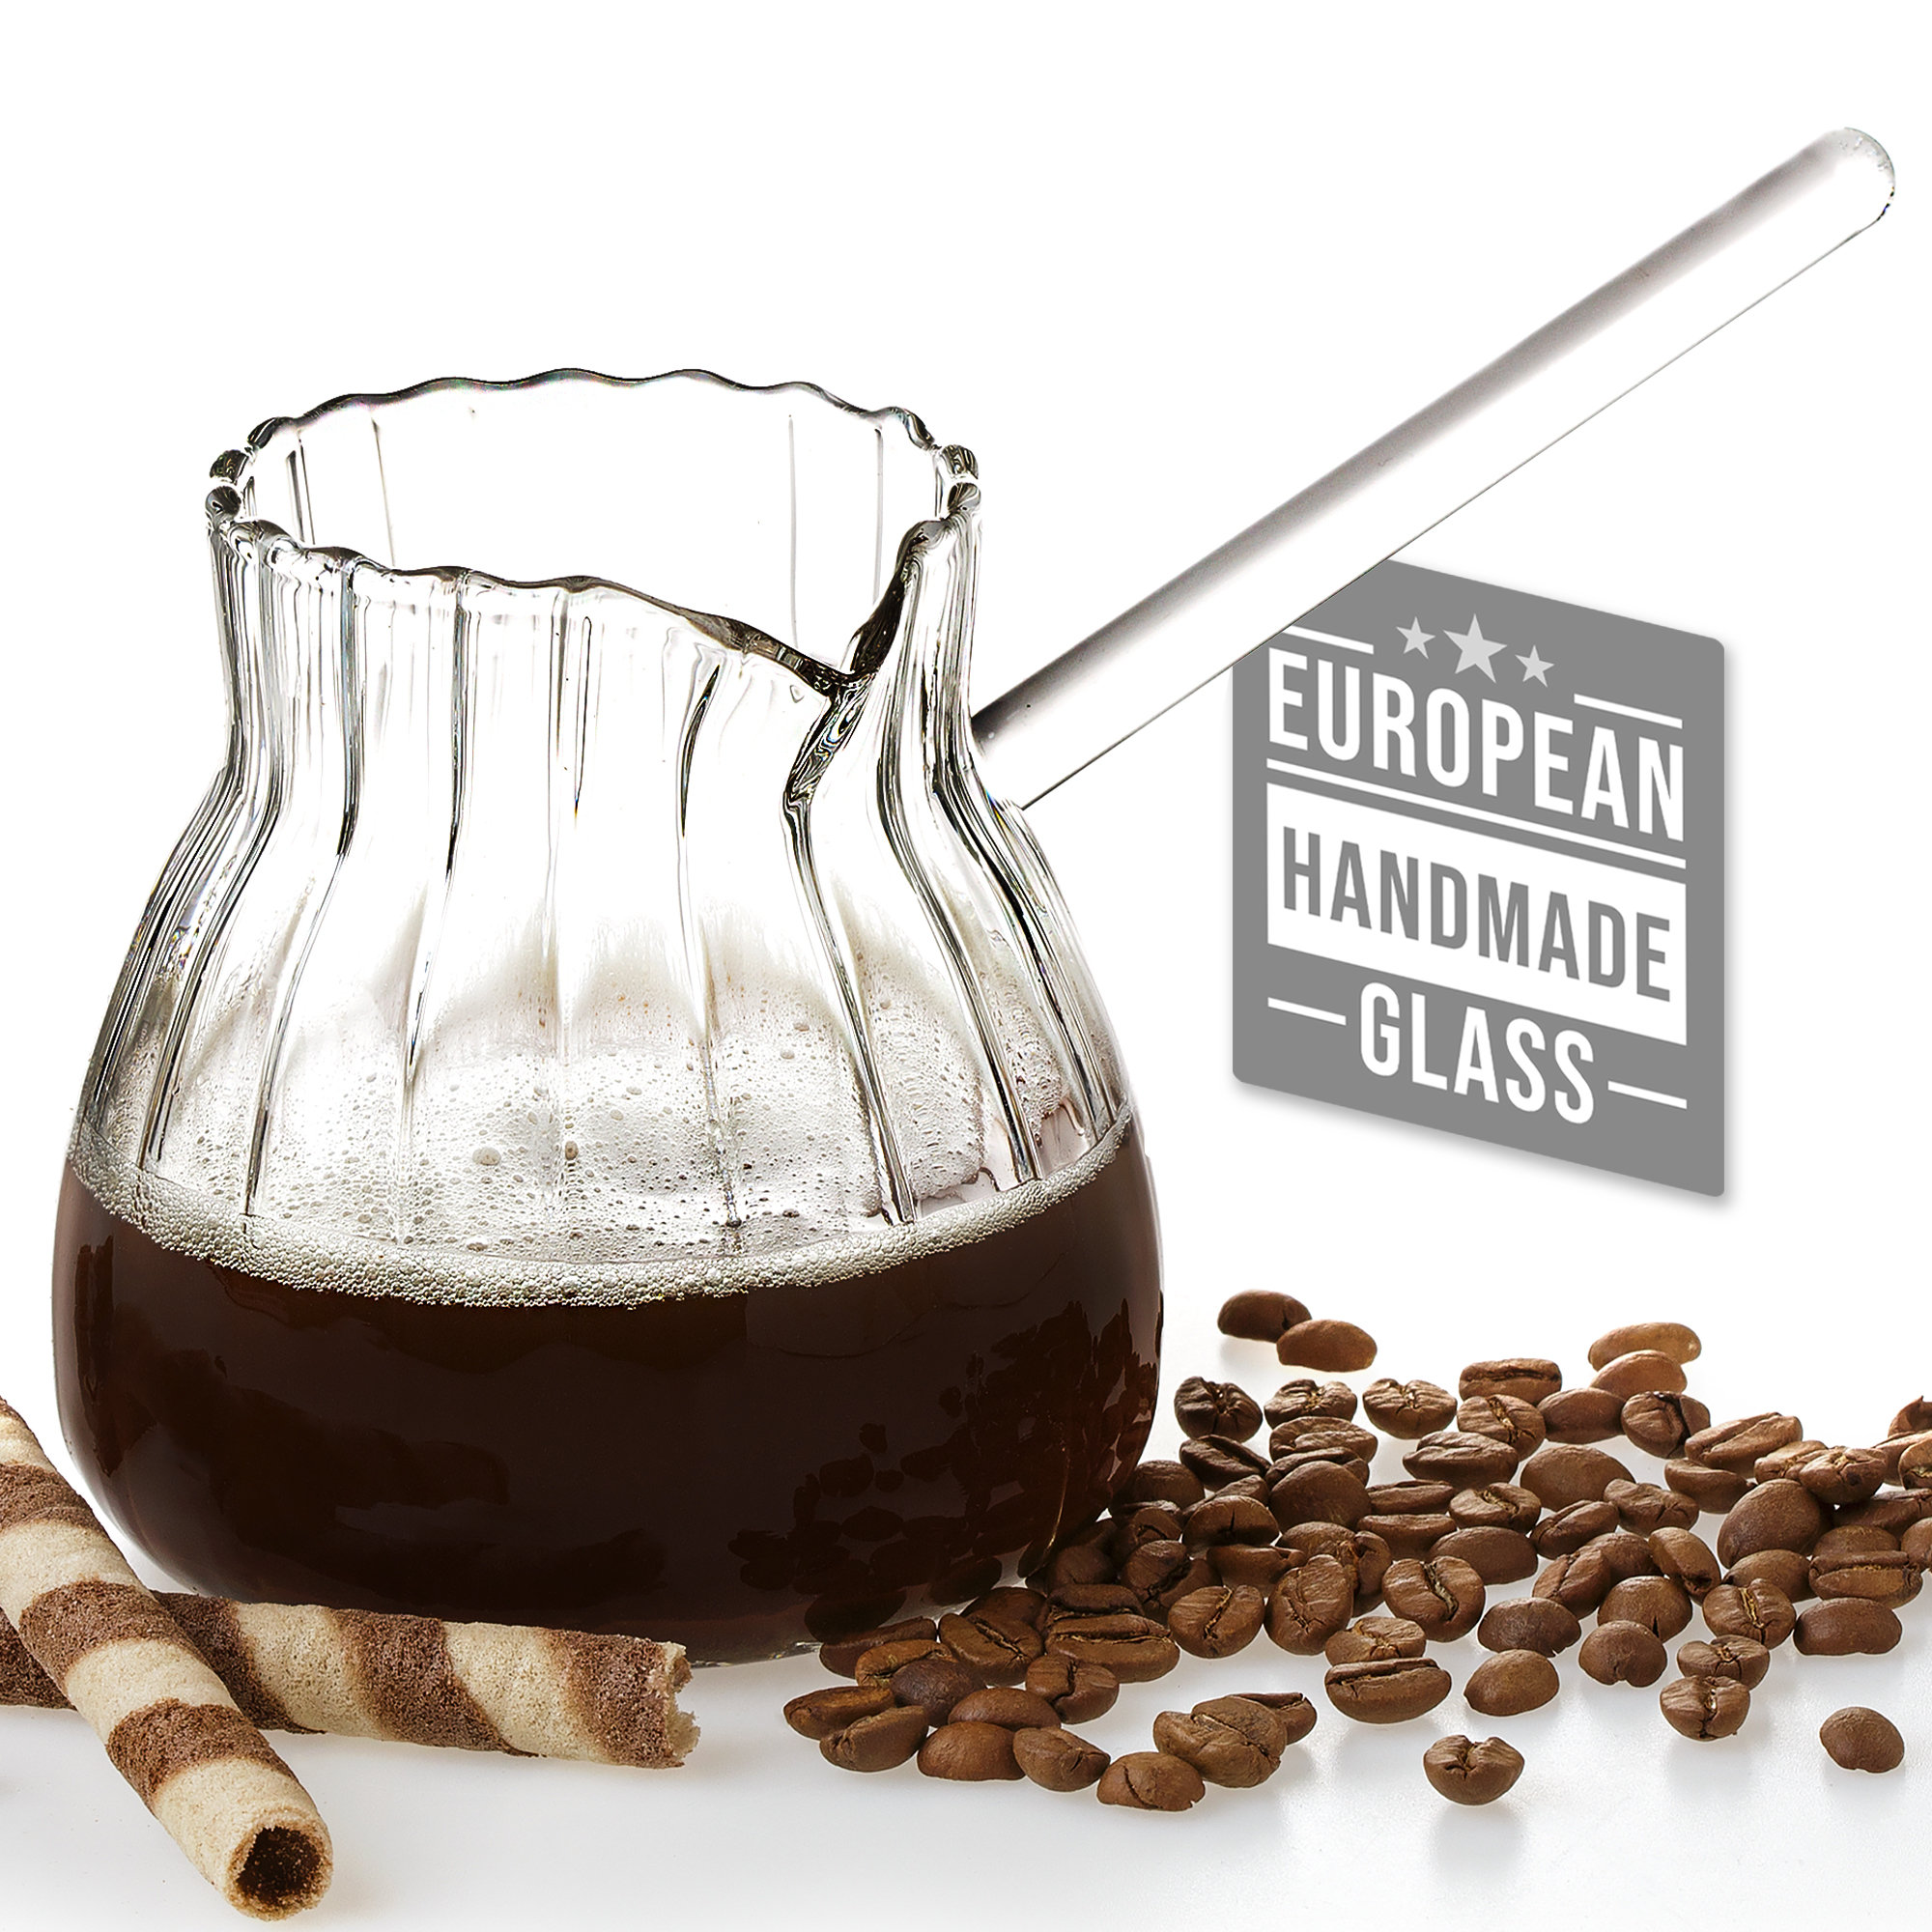 High Quality Stainless Steel Butter Warmer Coffee Milk Warmer Turkish  Coffee Pot 24 Oz.